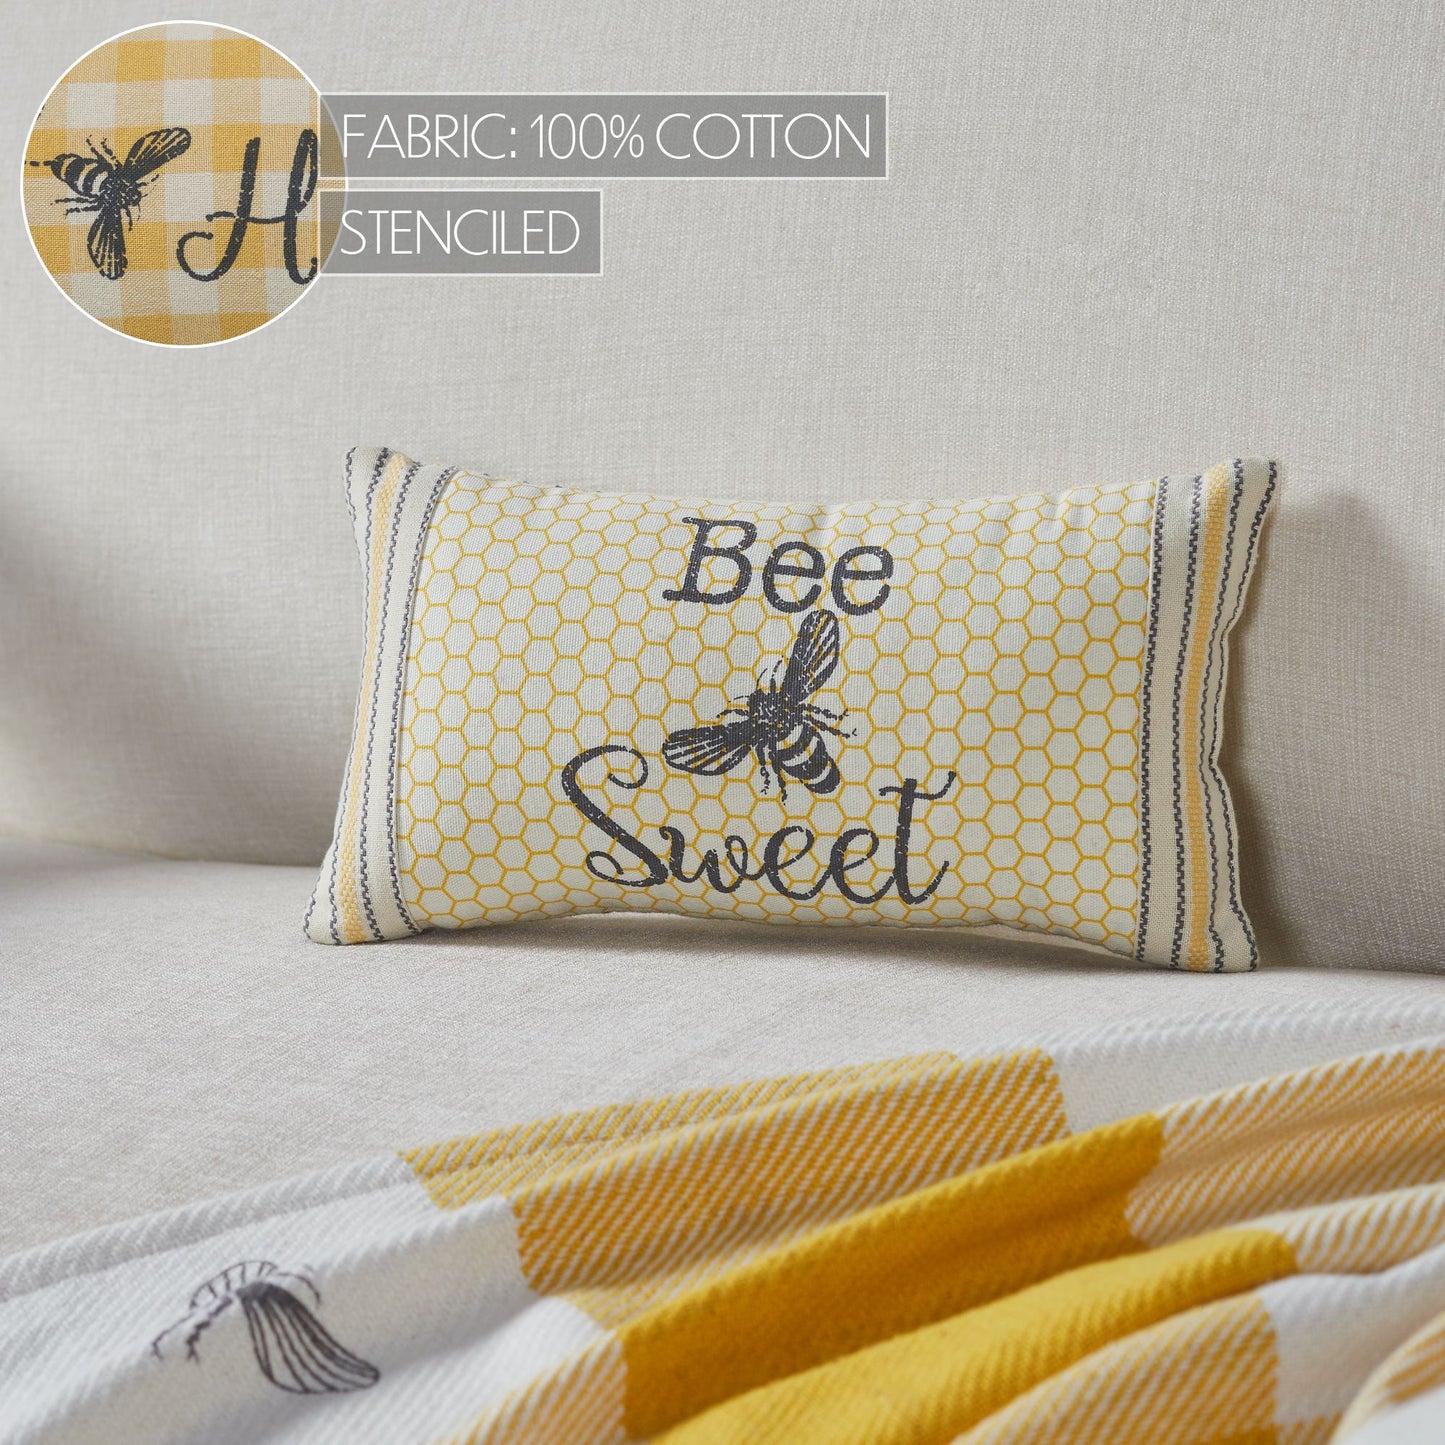 Buzzy Bees Bee Sweet Pillow 7x13 SpadezStore